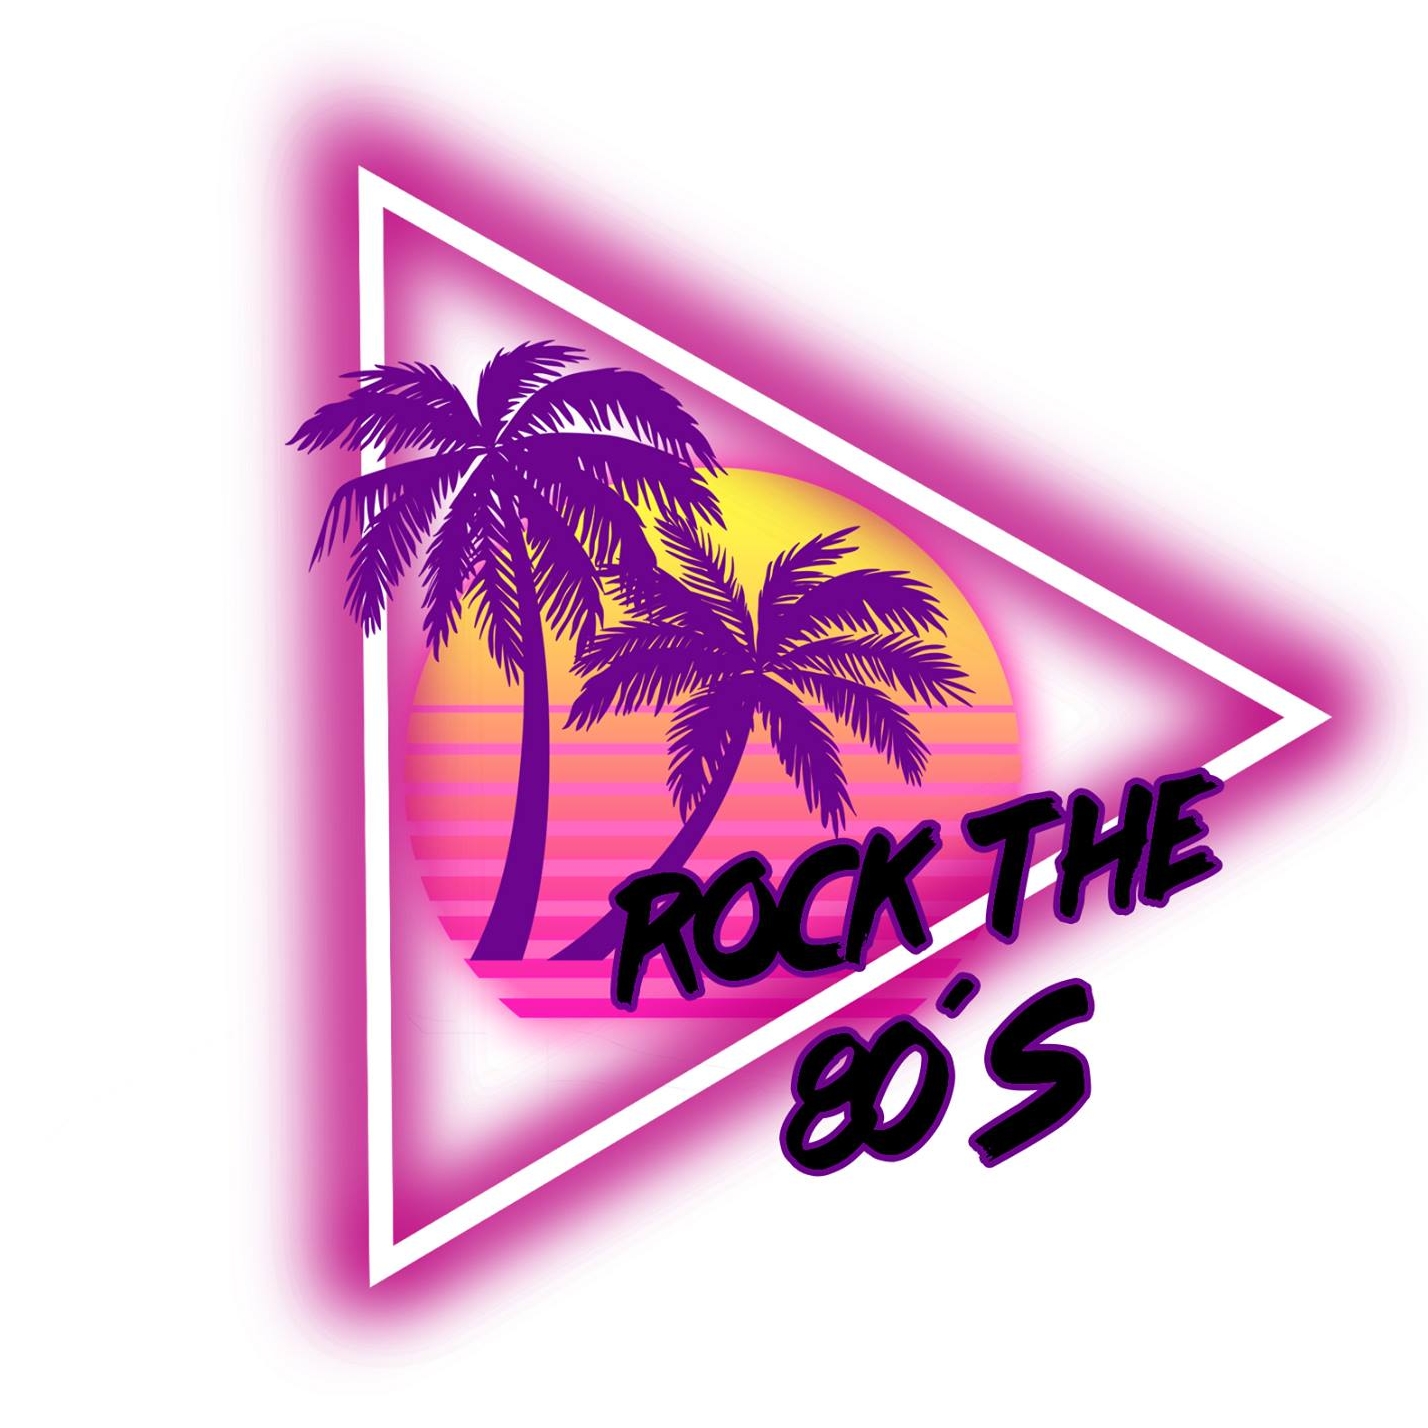 En este momento estás viendo Rock the 80’s